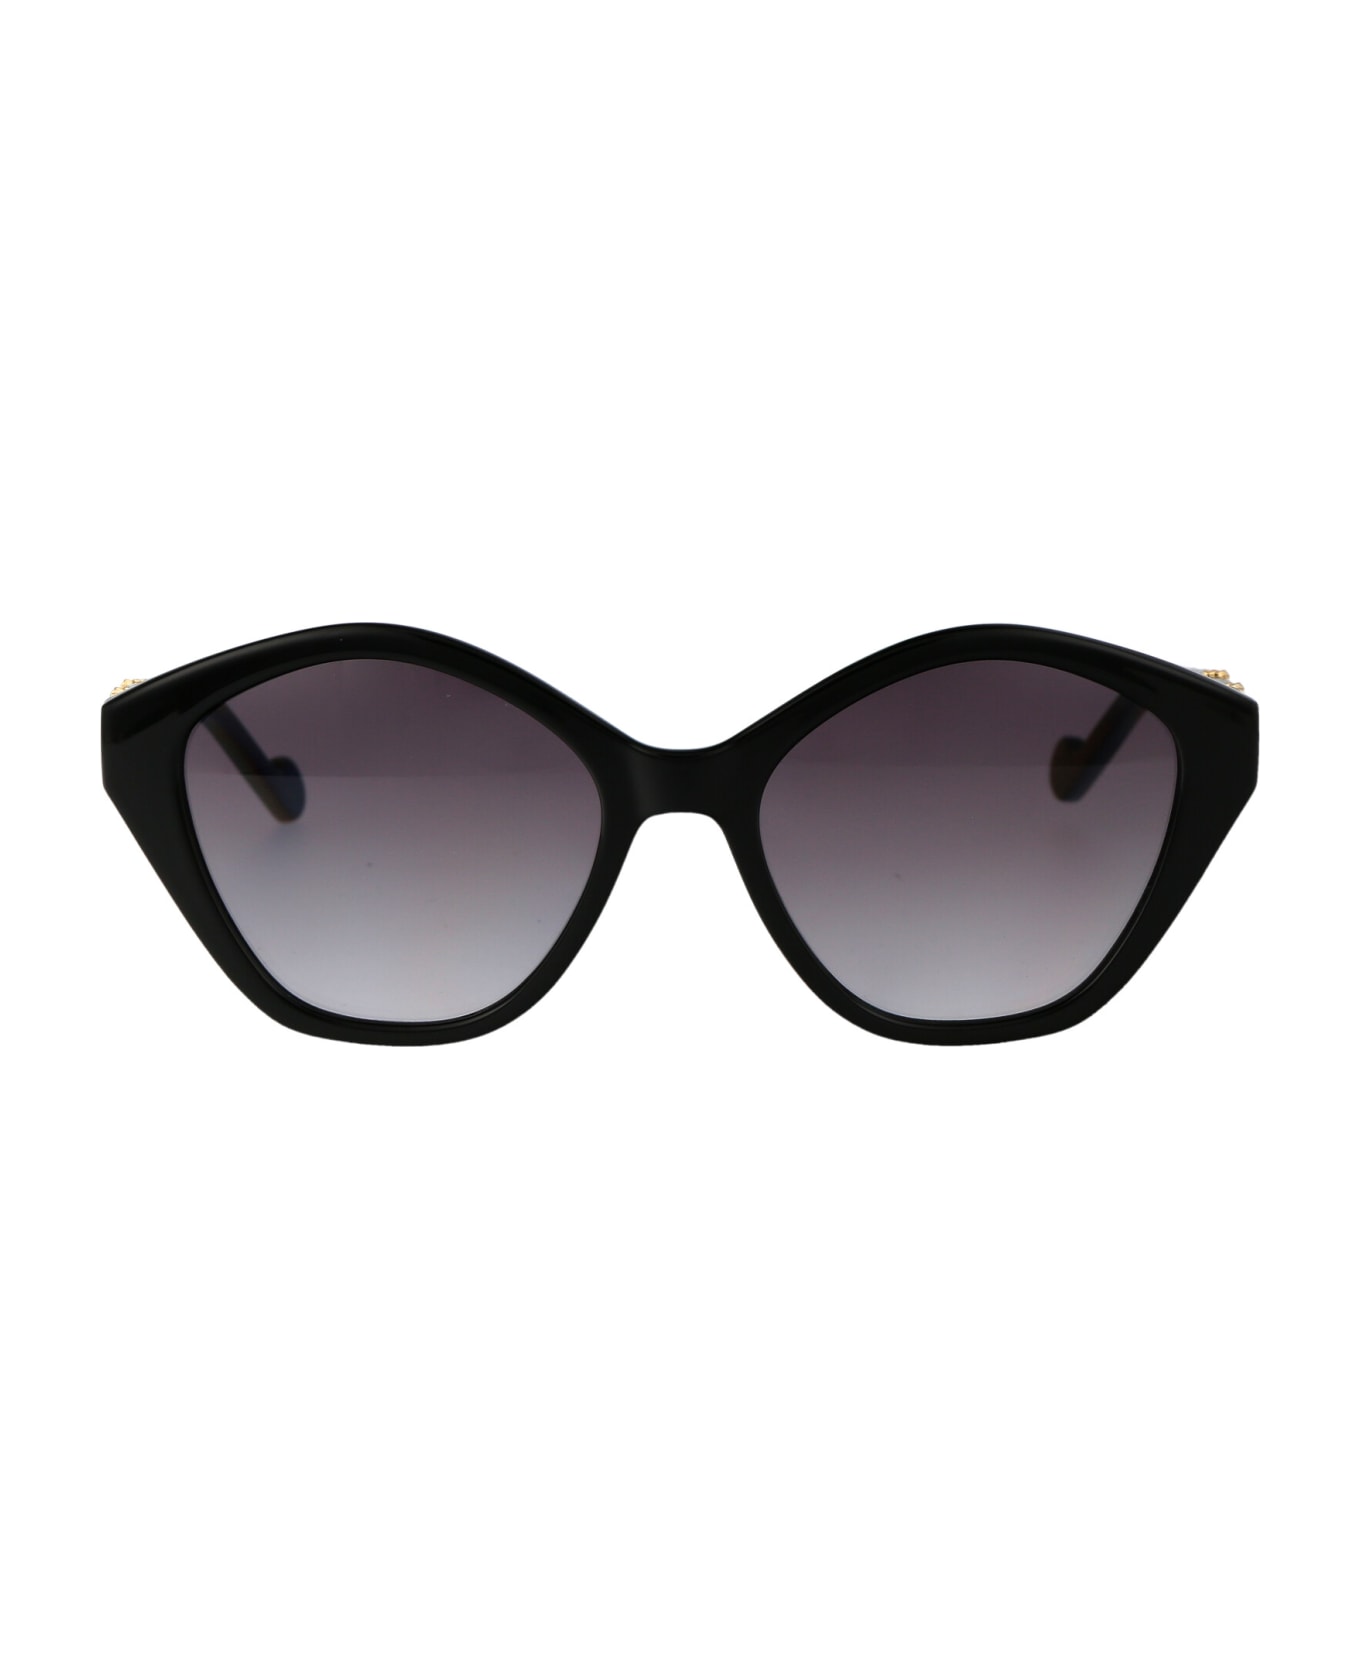 Liu-Jo Lj770s Sunglasses - 001 BLACK